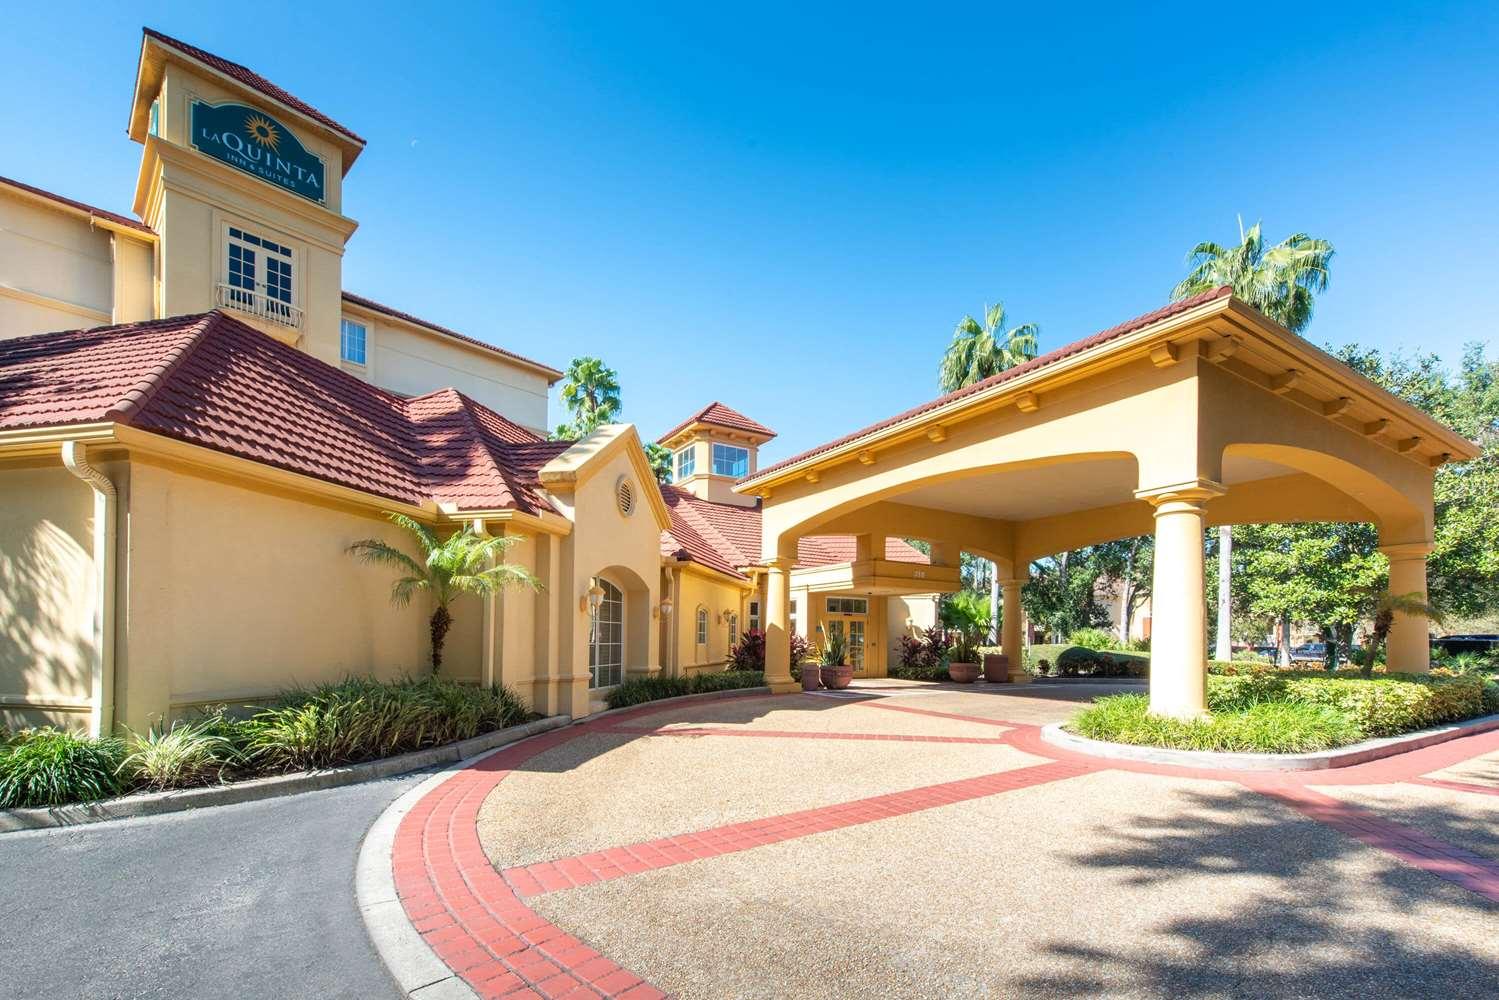 La Quinta Inn & Suites by Wyndham Tampa Brandon Regency Park in Brandon, FL